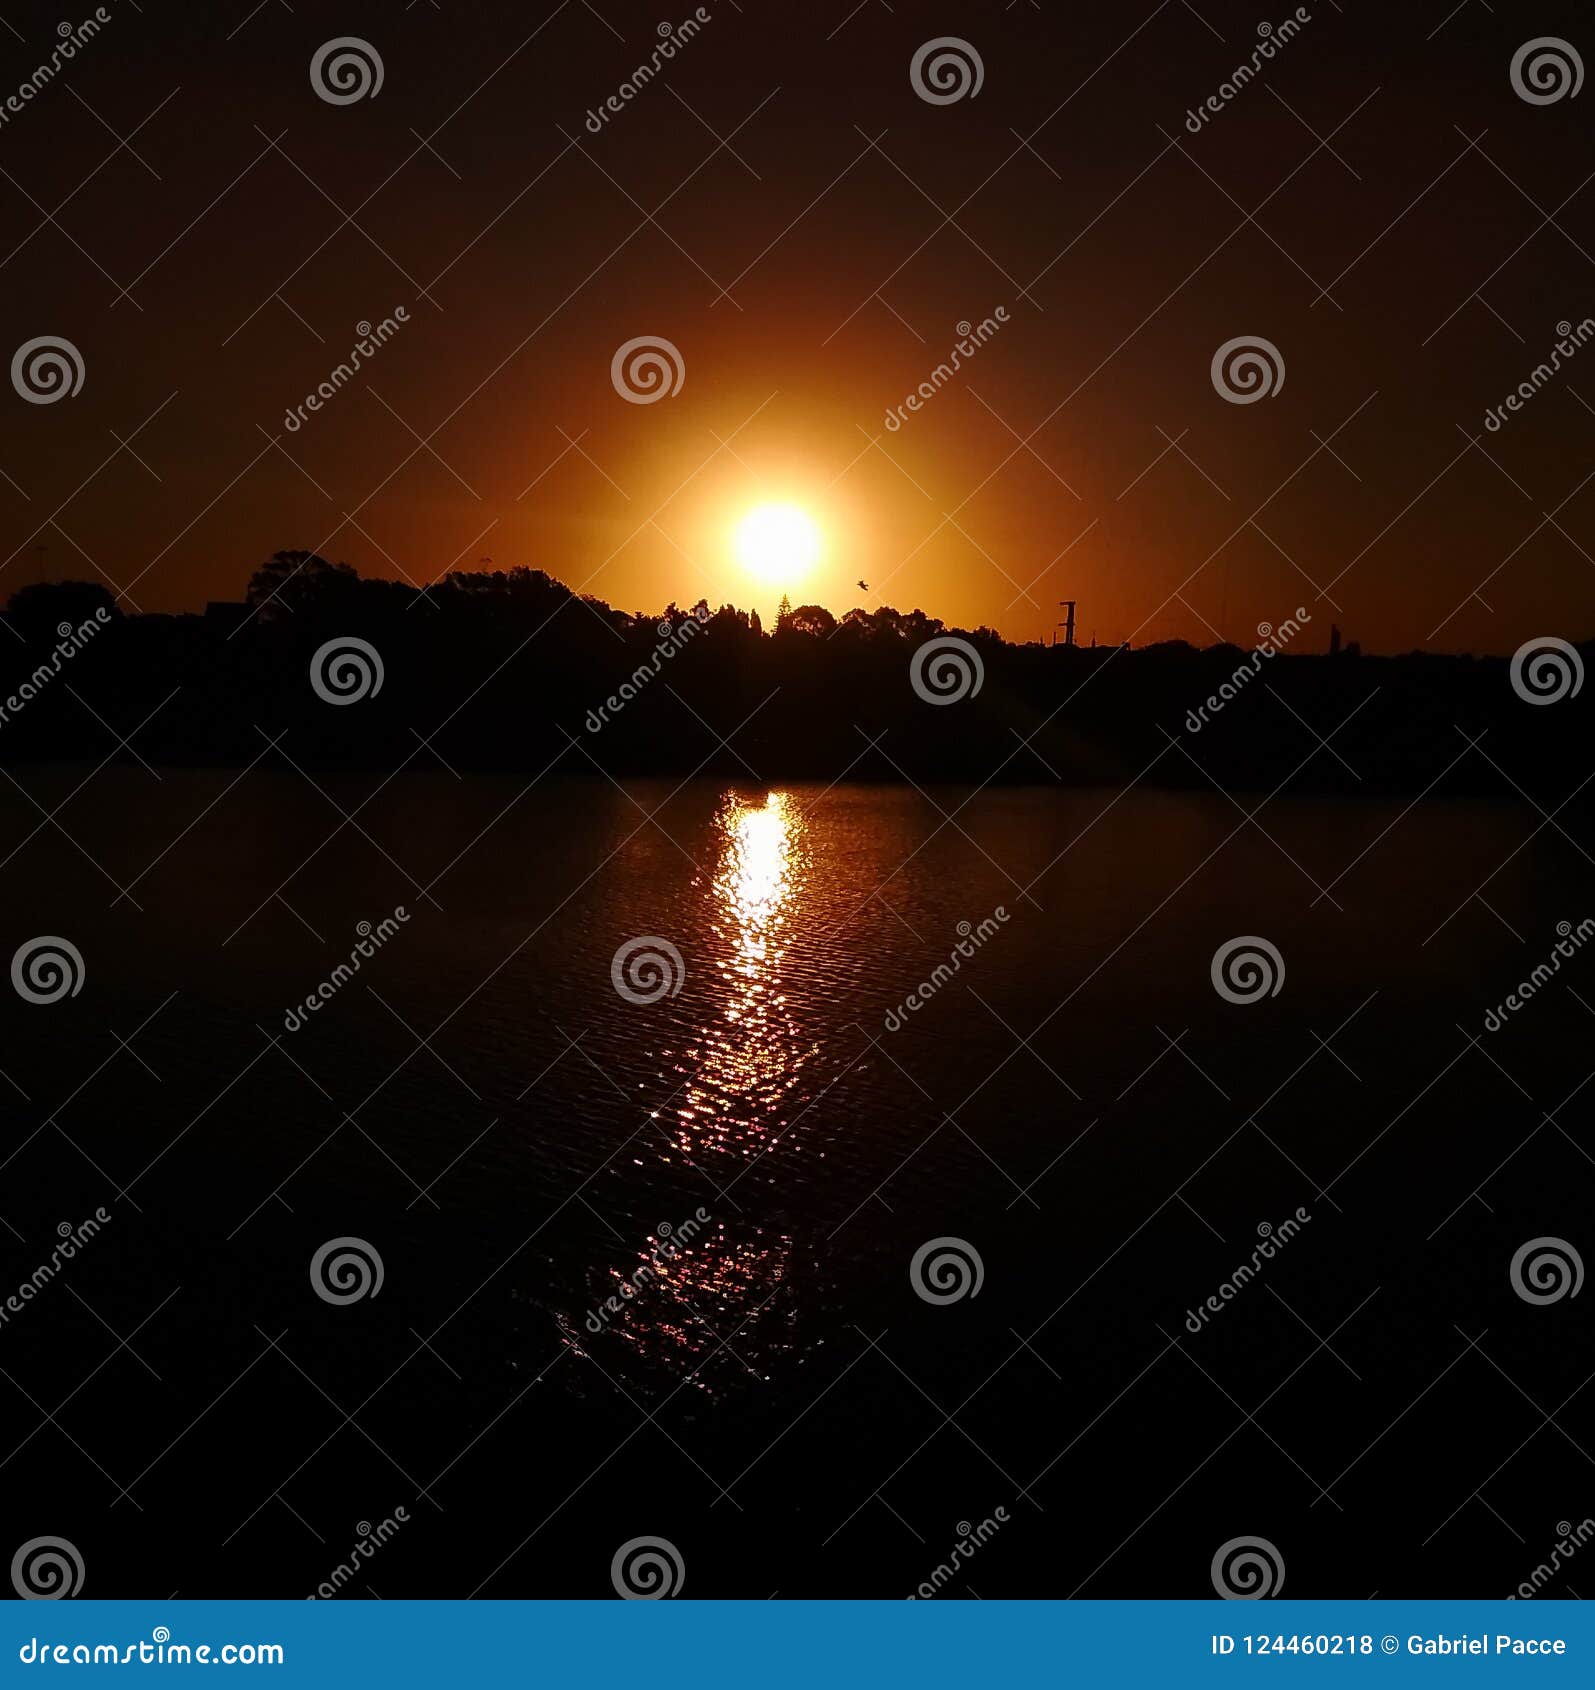 sunset in the bridge